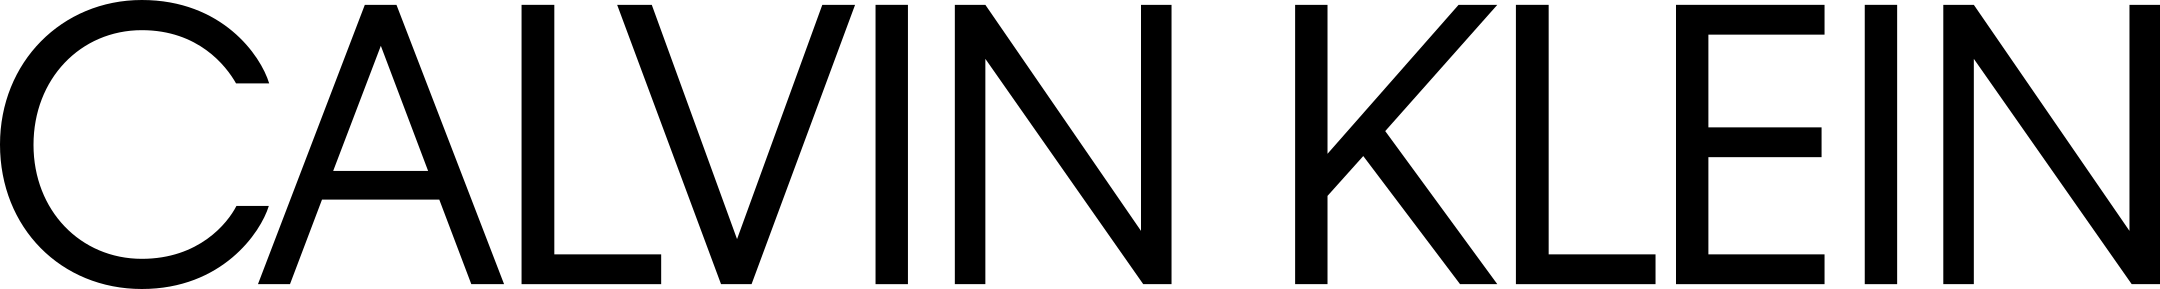 Calvin Klein logo бесплатно PNG Image